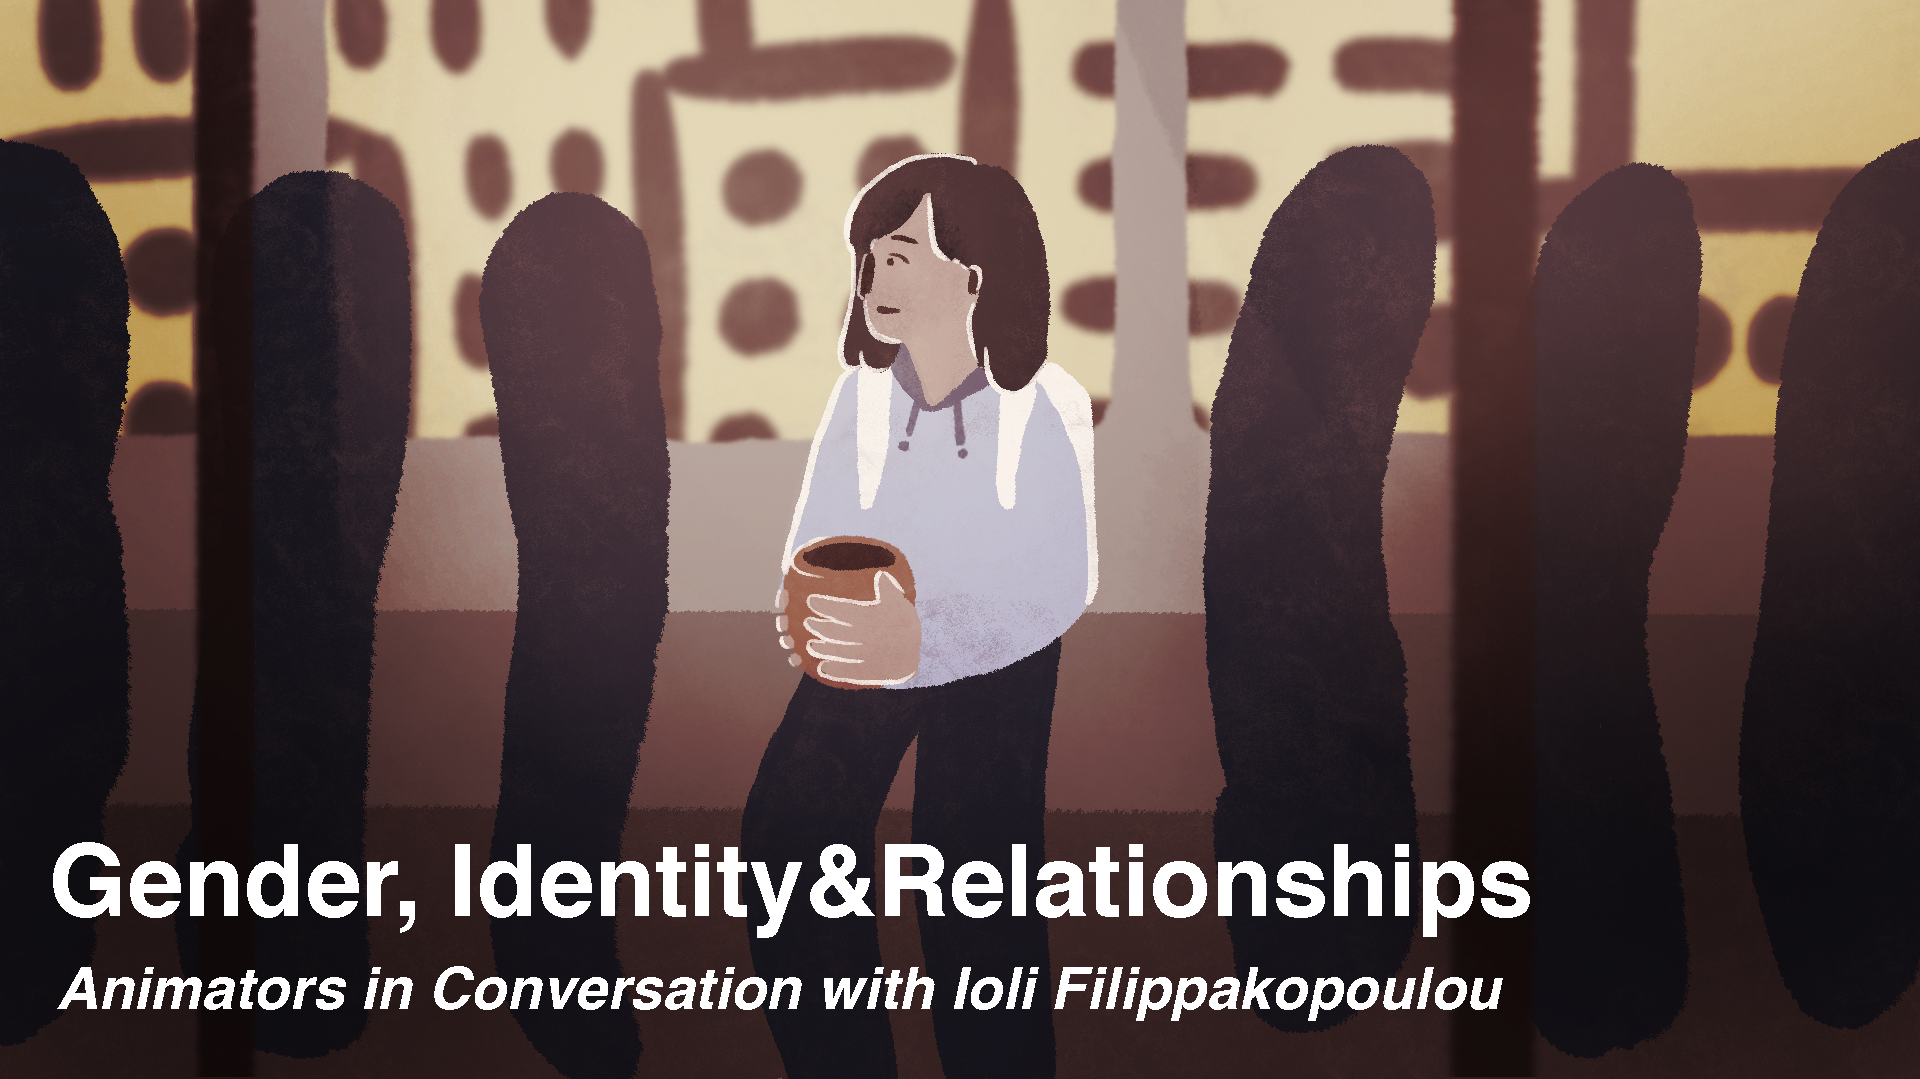 Animators in Conversation: Gender, Identity & Relationships